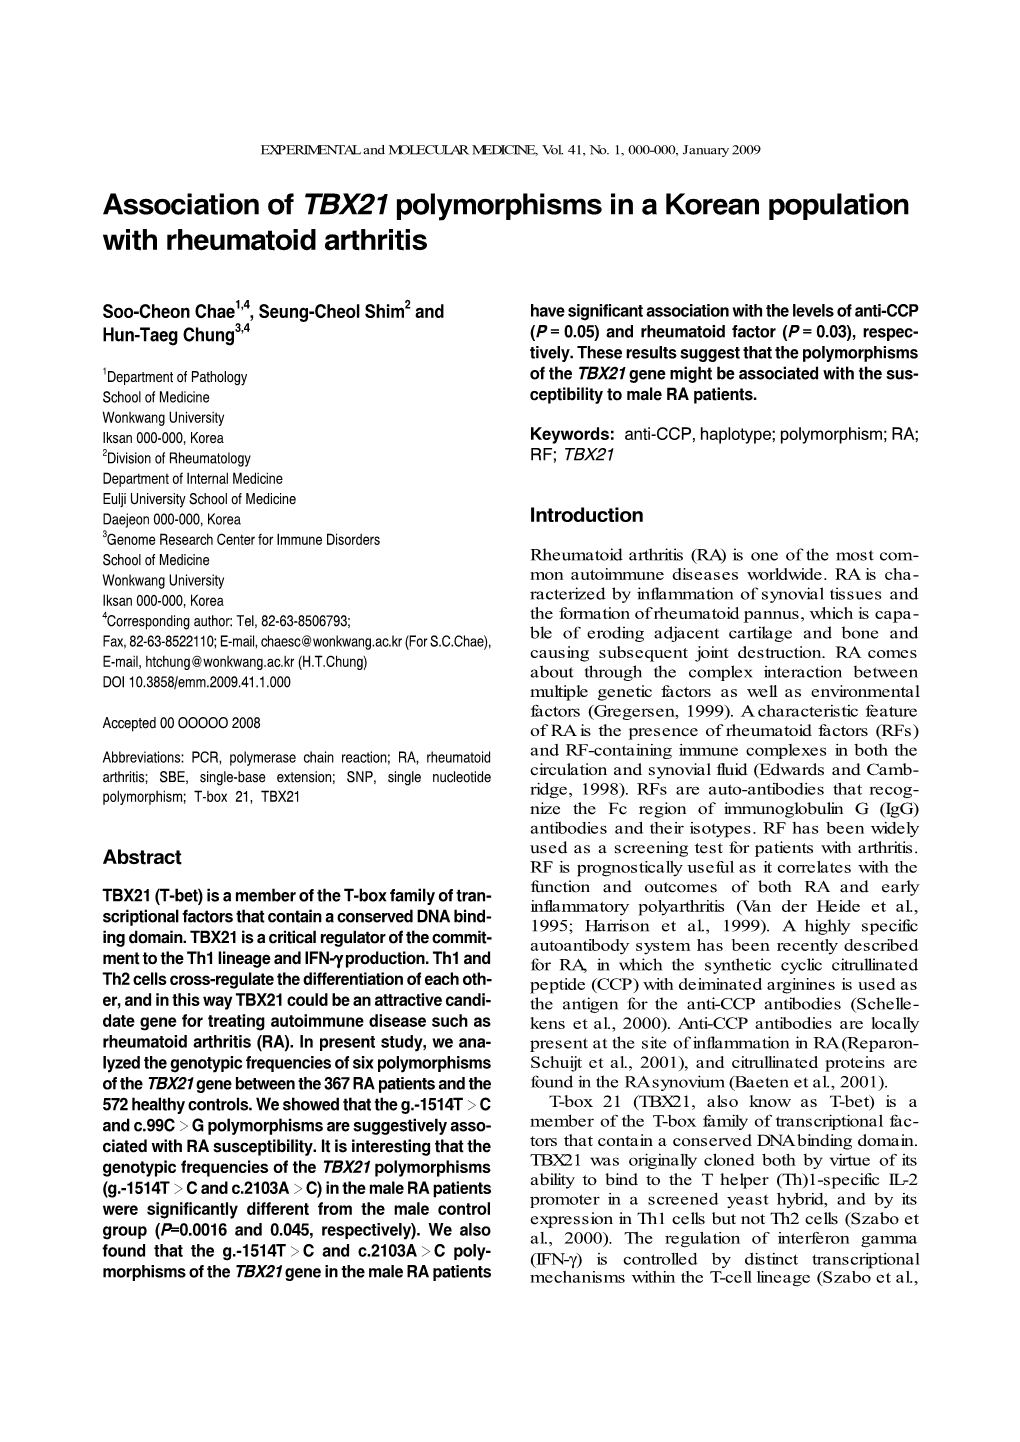 Association of TBX21 Polymorphisms in a Korean Population with Rheumatoid Arthritis